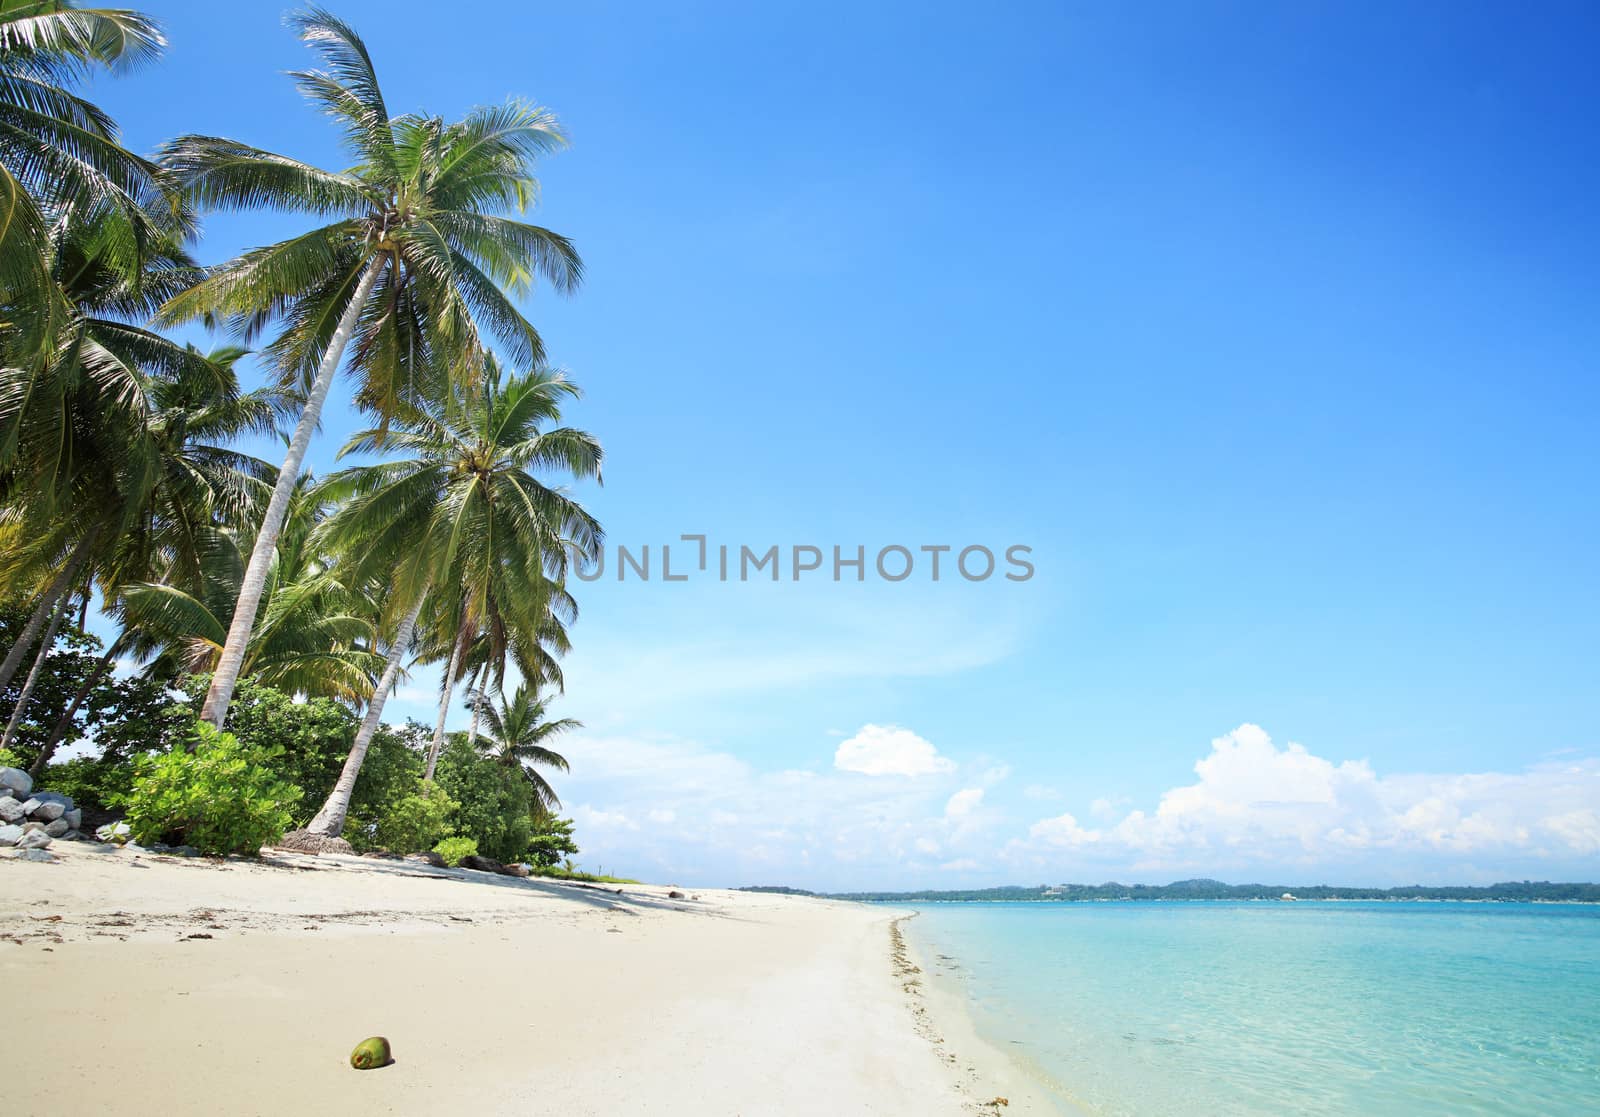 Tropical beach by photosoup